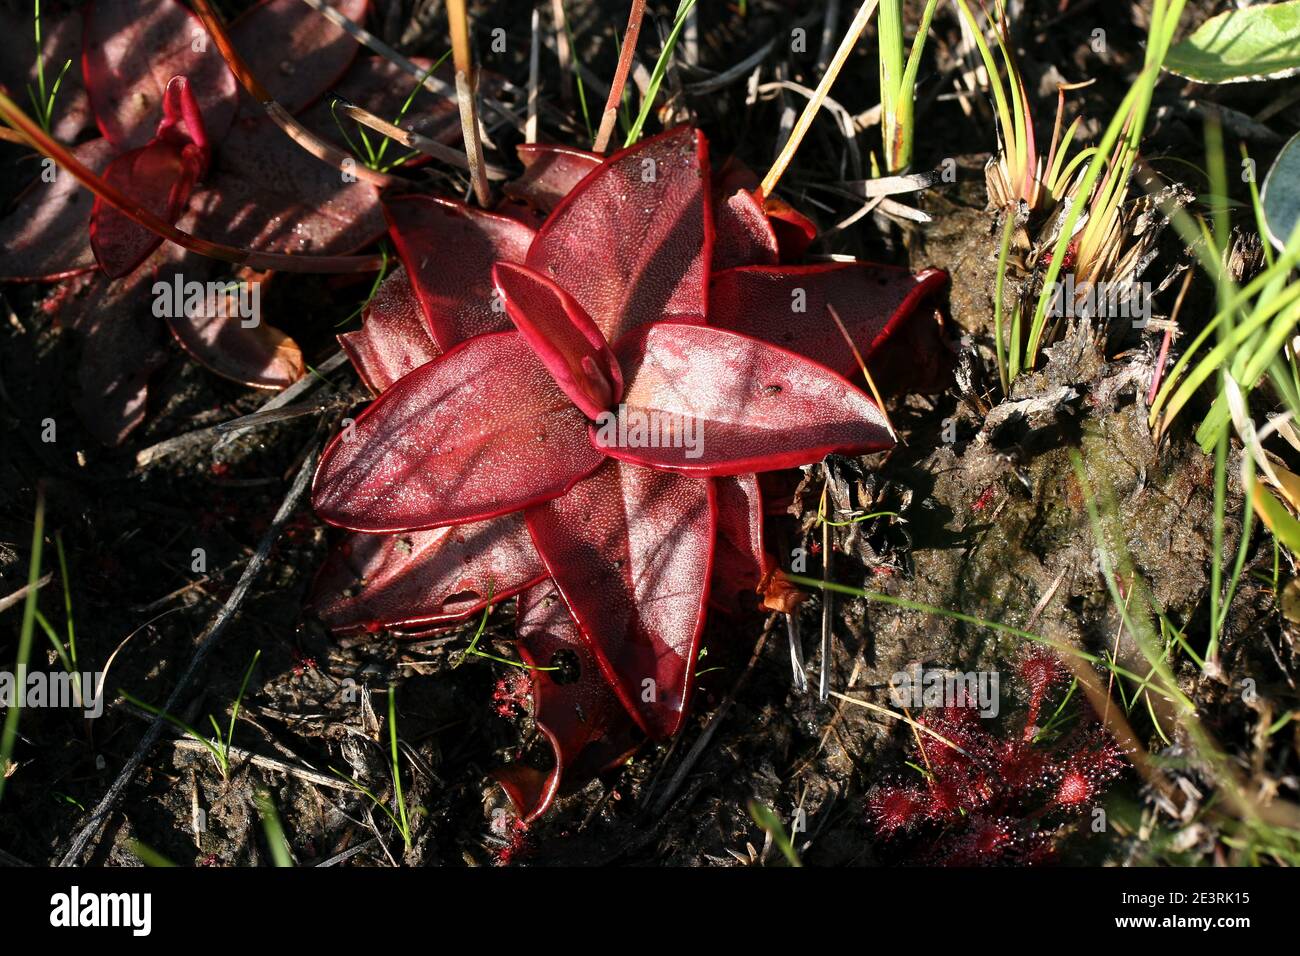 Chapman's Butterwort (Pinguicula planifolia), seepage bog, Gulf coastal plain, Longleaf Pine ecosystem, SE USA, by Dembinsky Photo Assoc Stock Photo